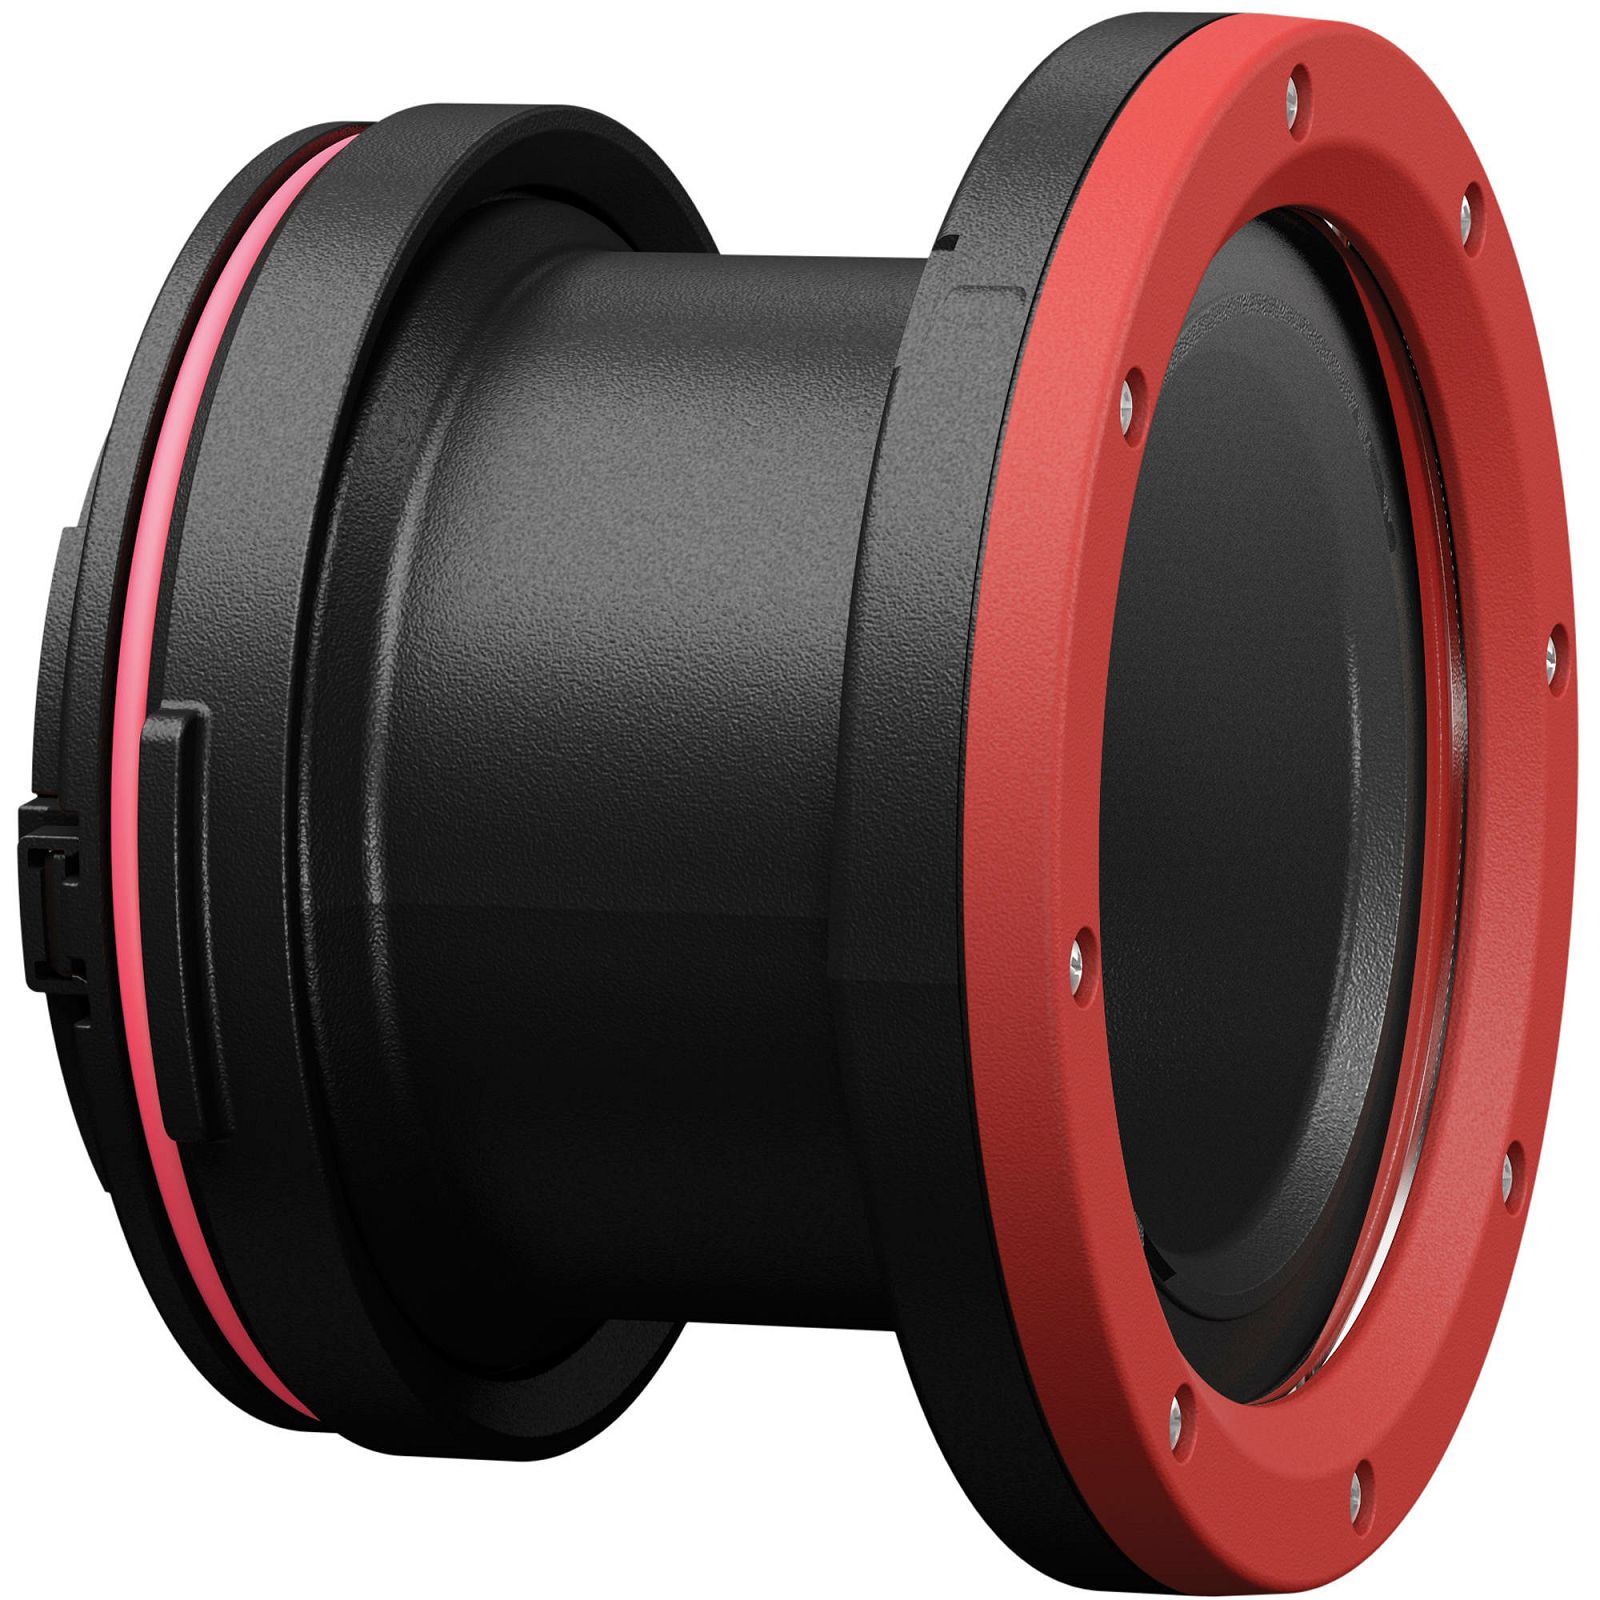 Olympus PPO-EP01 Lens port for E-M5/PT-EP08 (14-42mm, 9-18mm, 60mm) Underwater Accessory V6310110E000